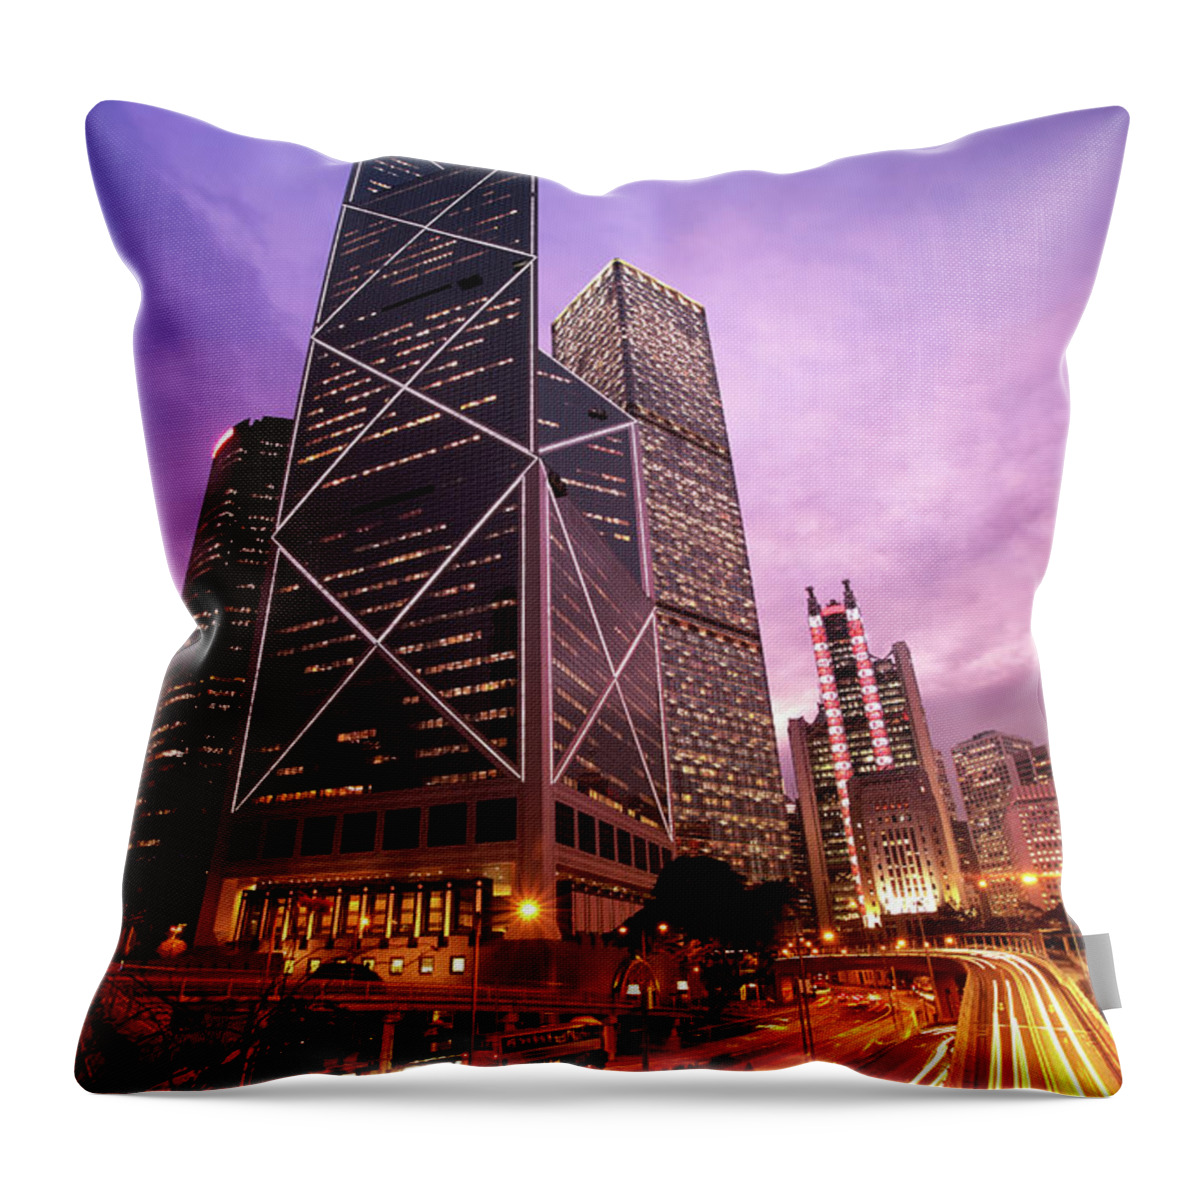 Chinese Culture Throw Pillow featuring the photograph Bank Of China Hong Kong At Night by Samxmeg